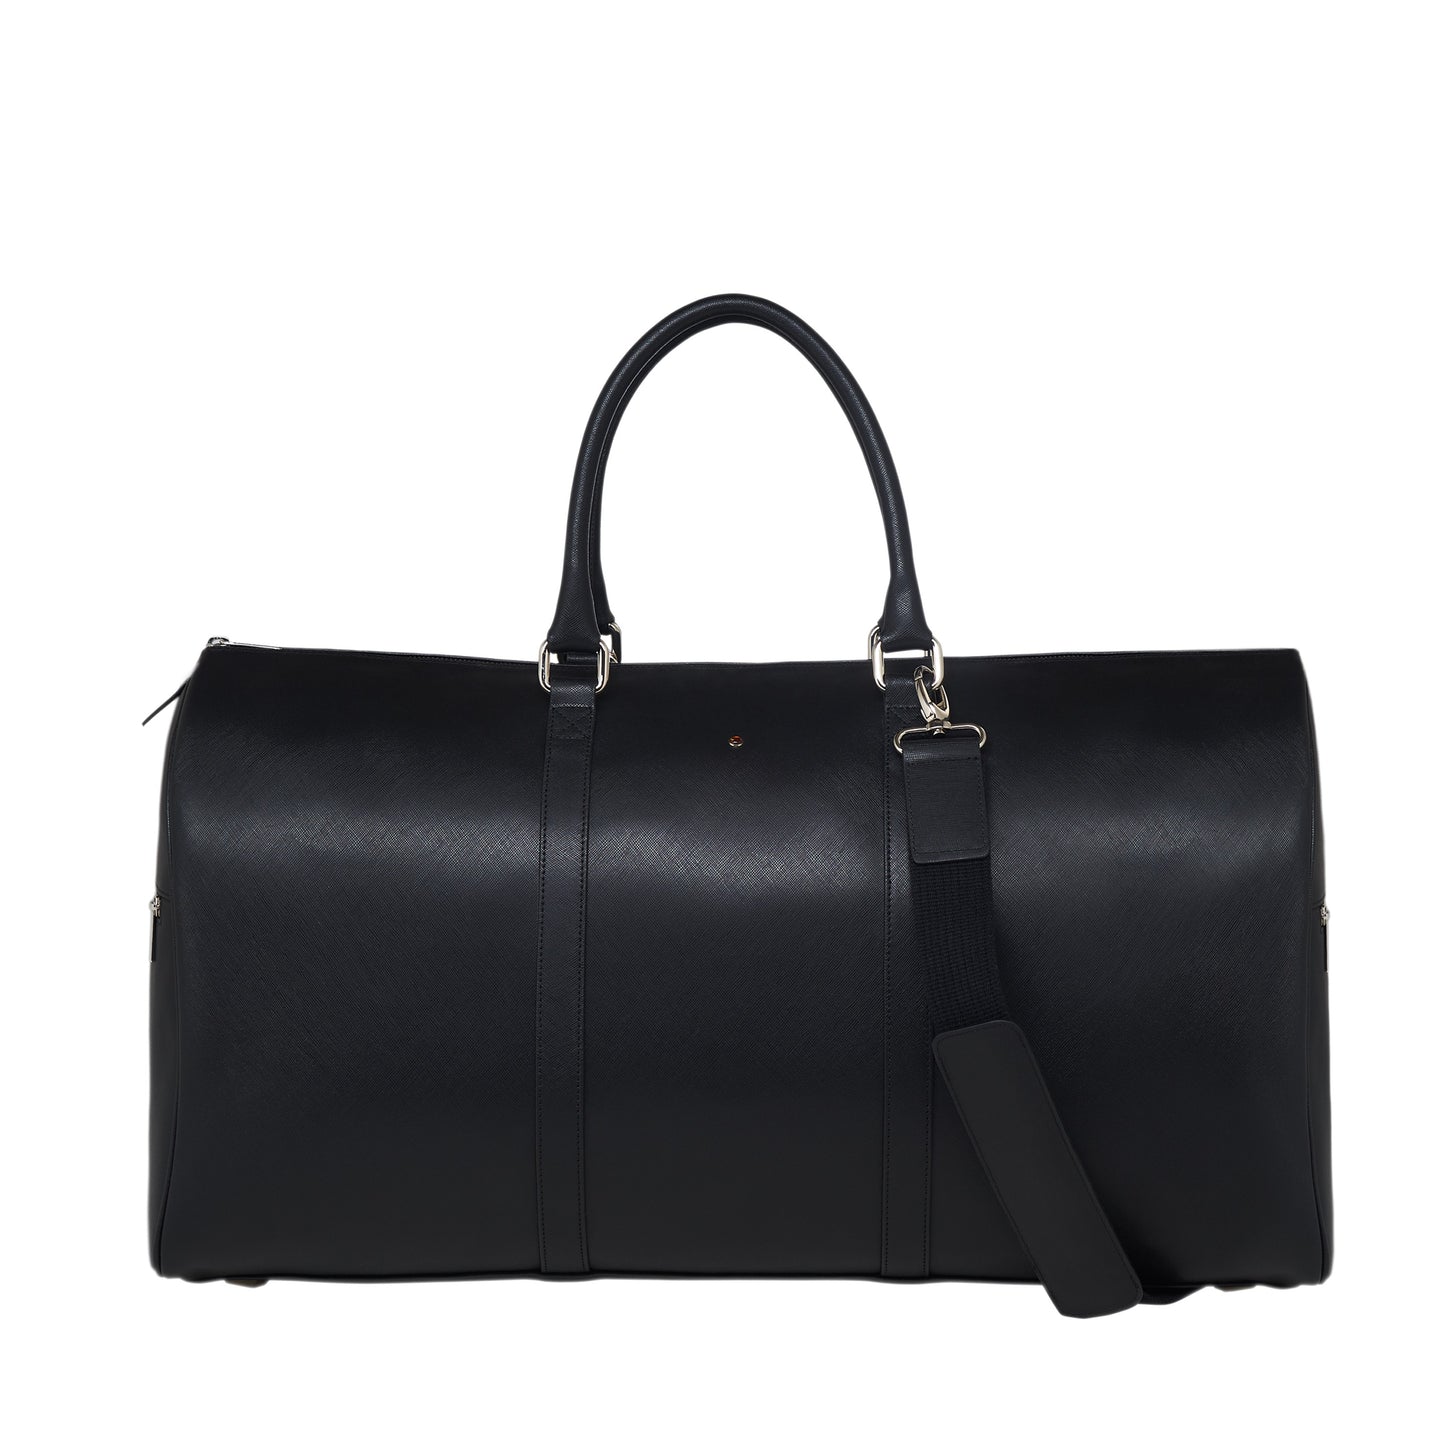 Artico black leather travel bag